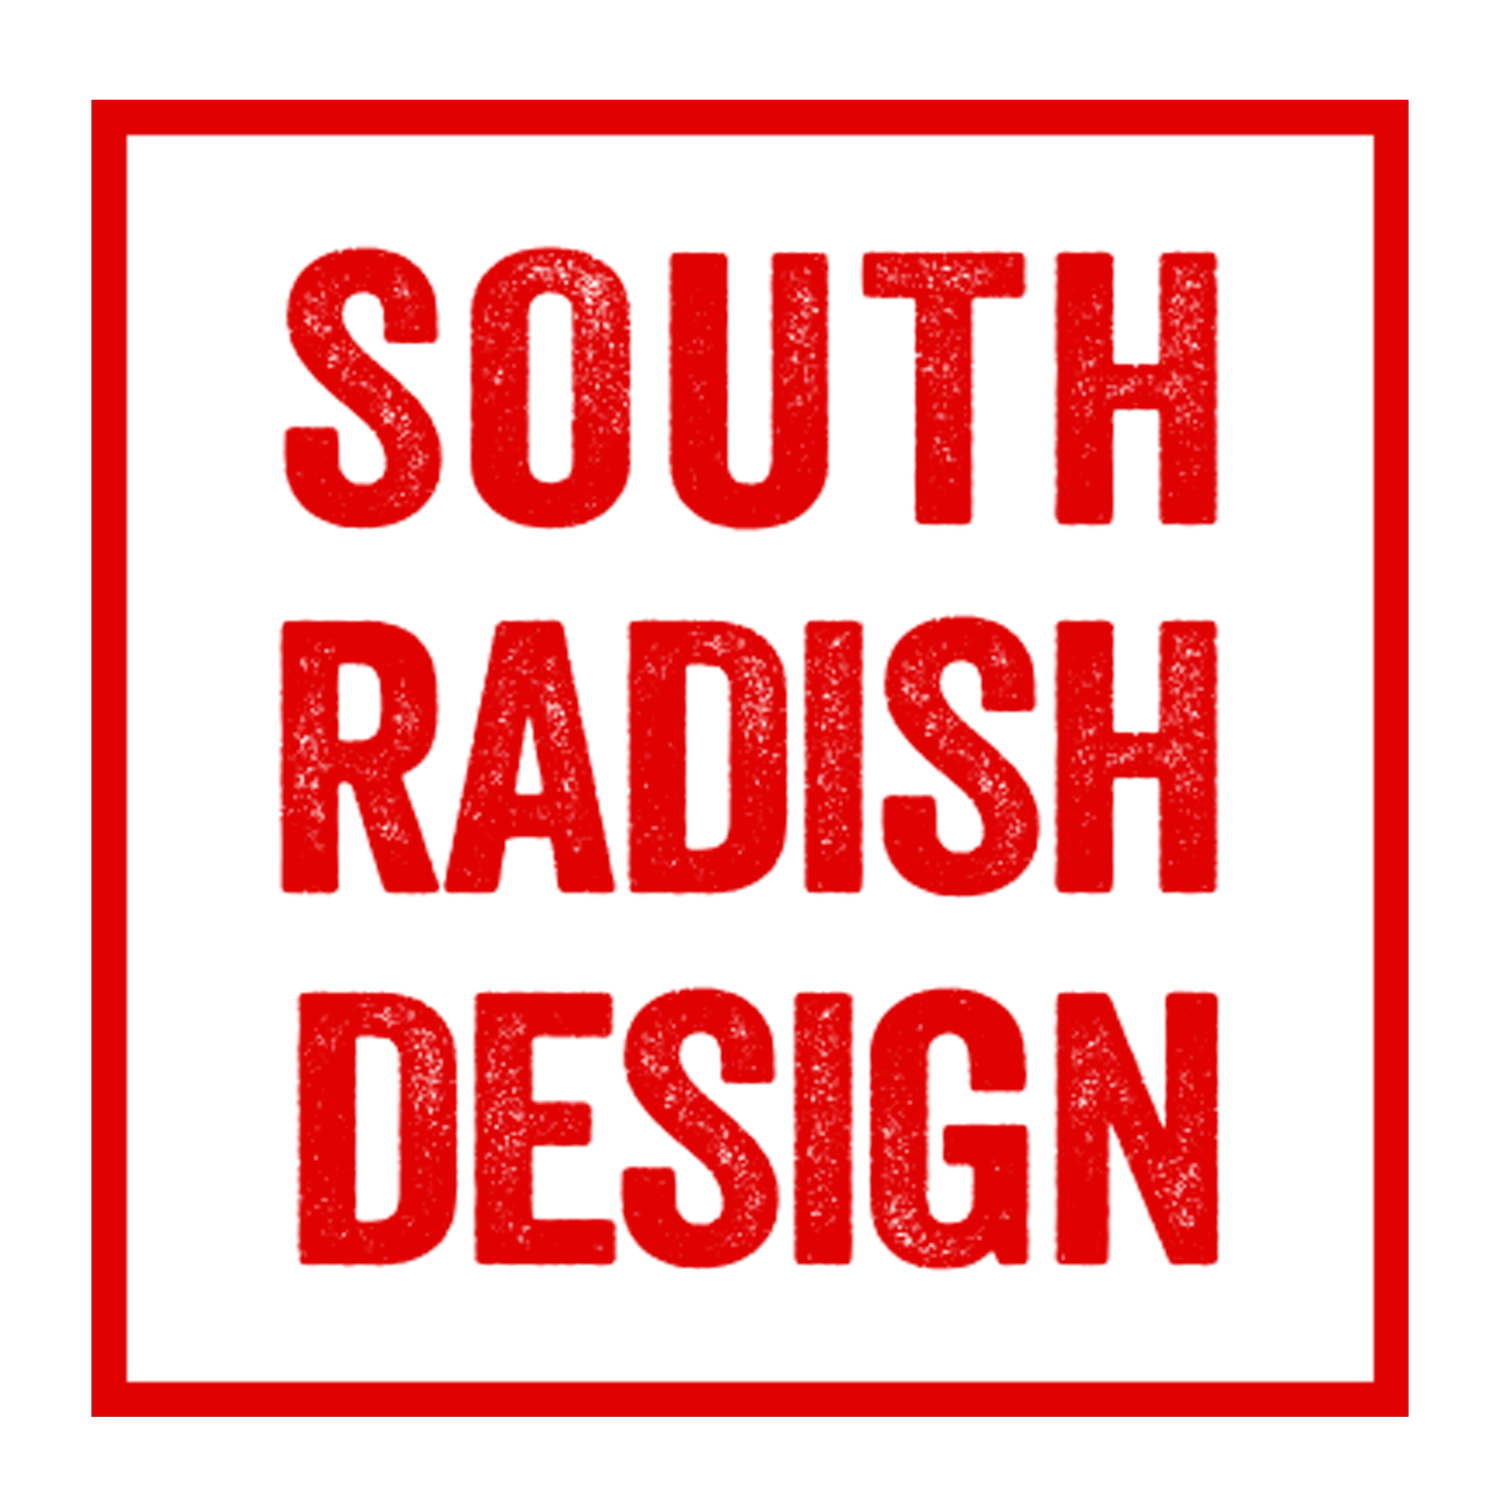 South Radish Design